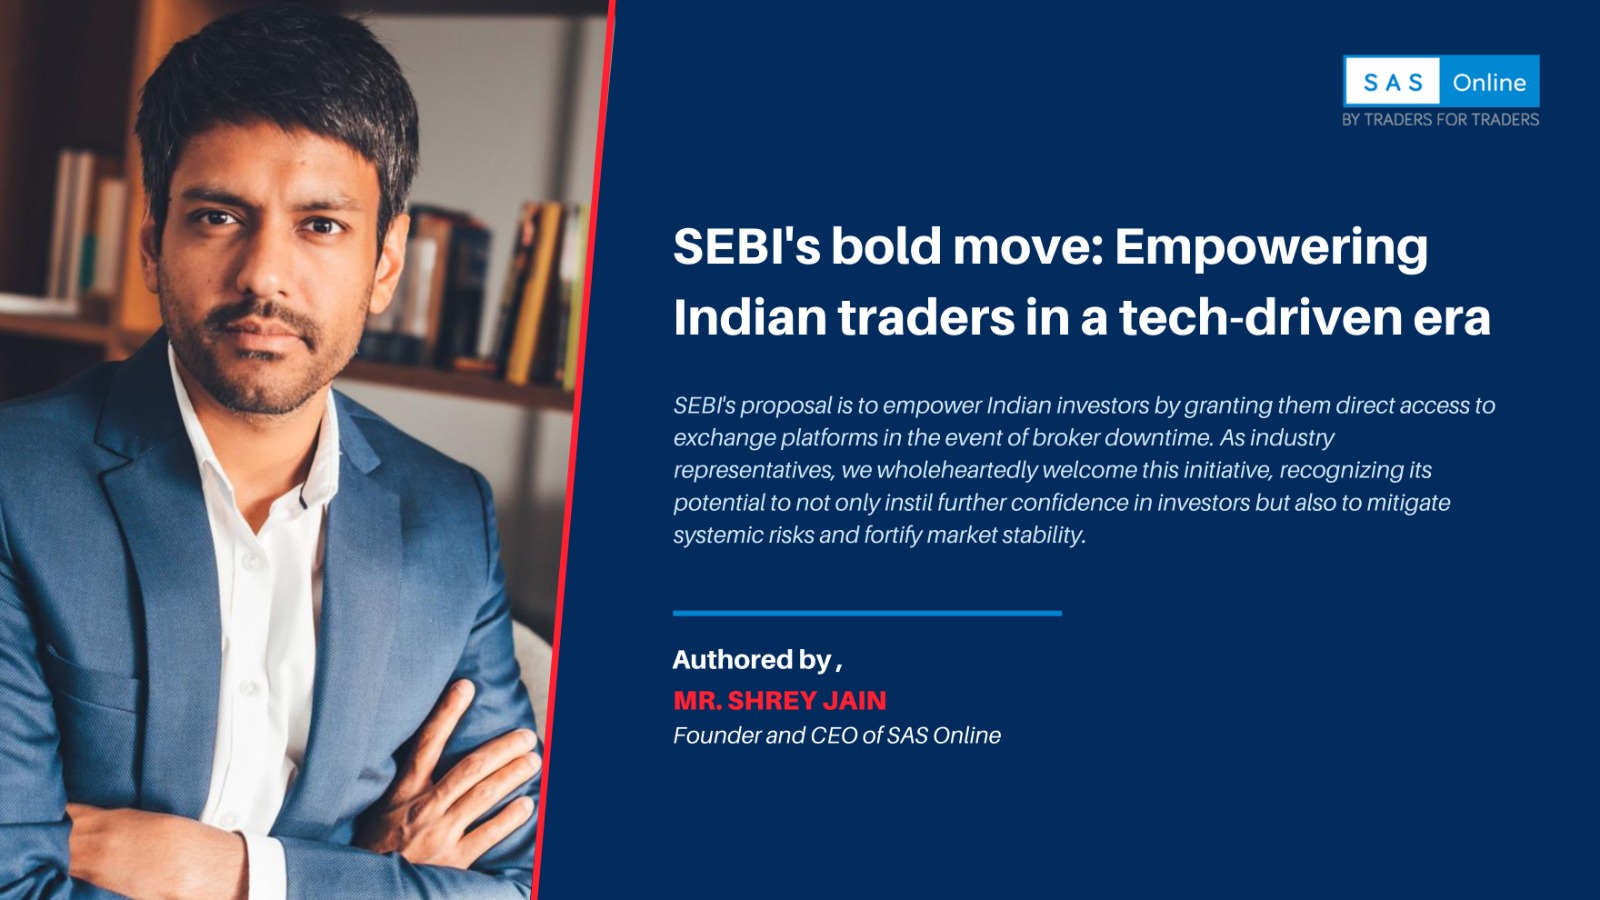 SEBI's bold move: Empowering Indian traders in a tech-driven era